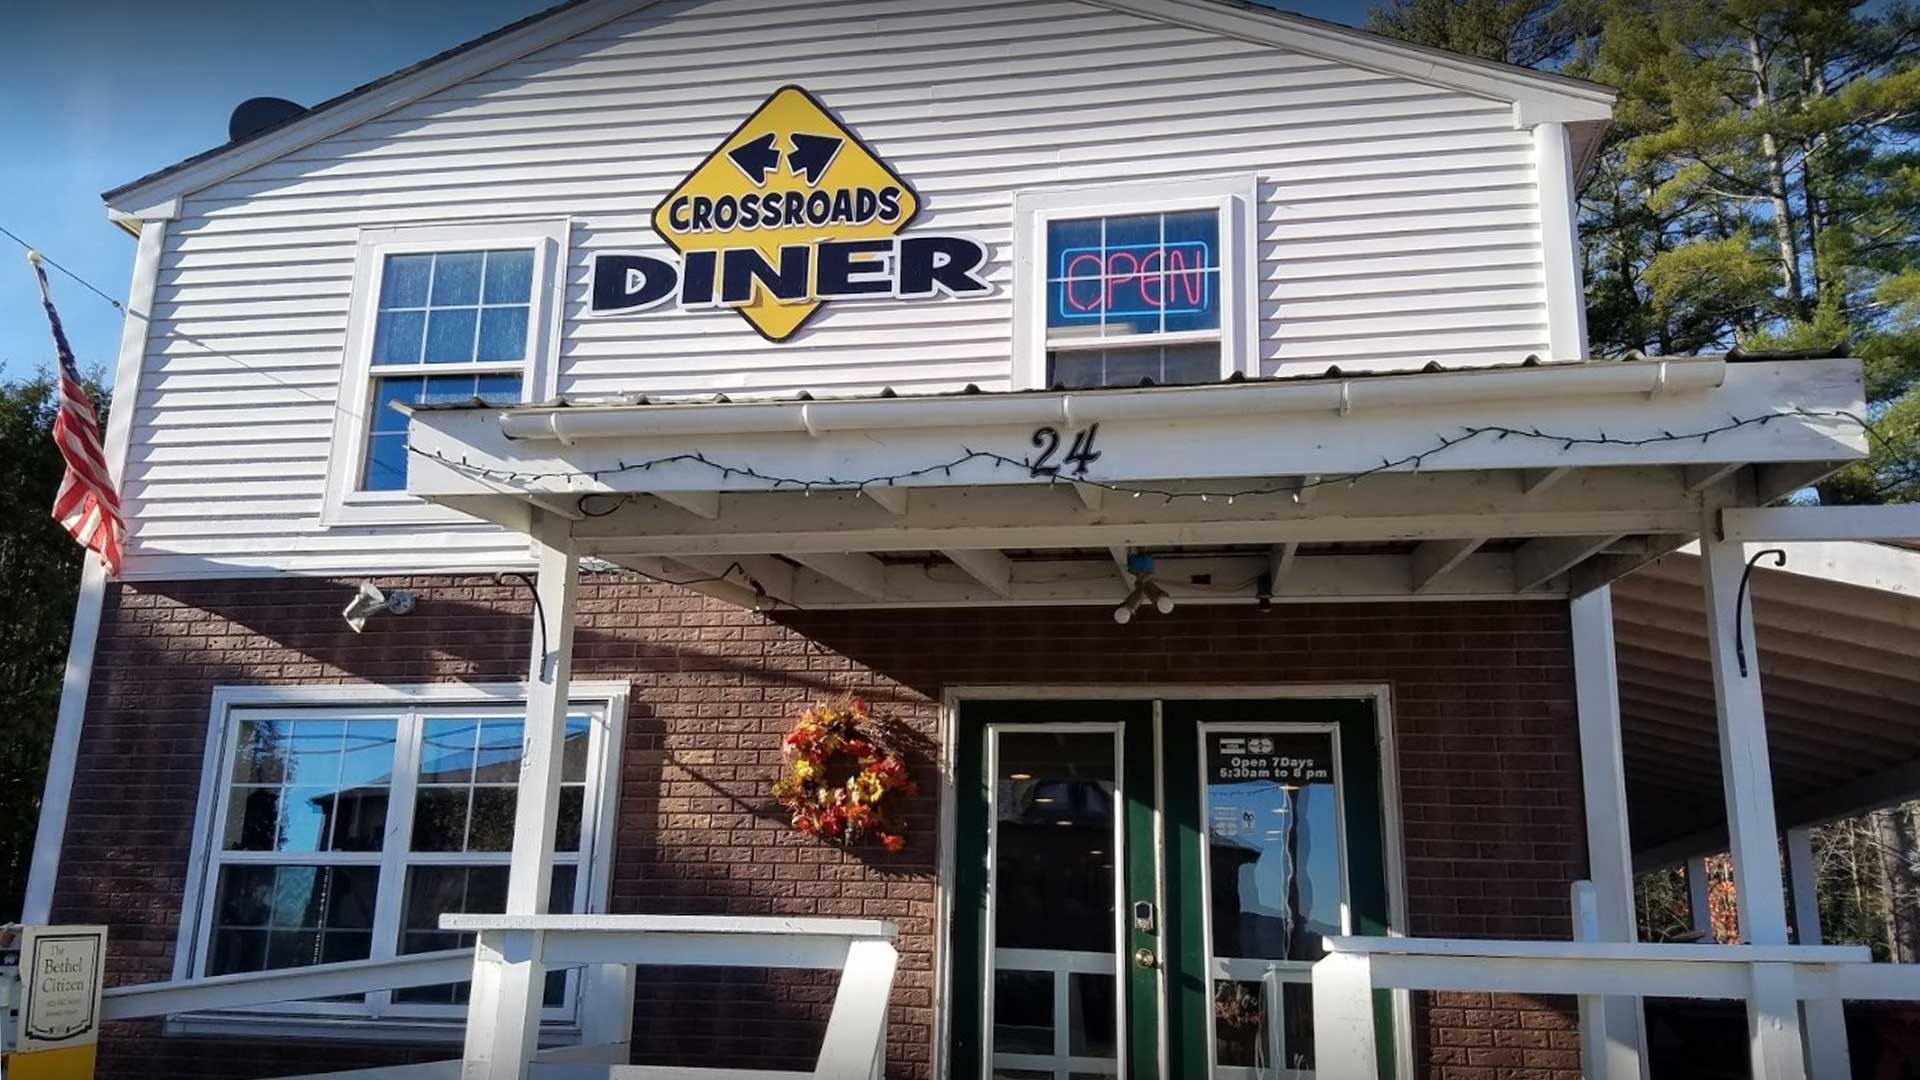 Crossroads Diner